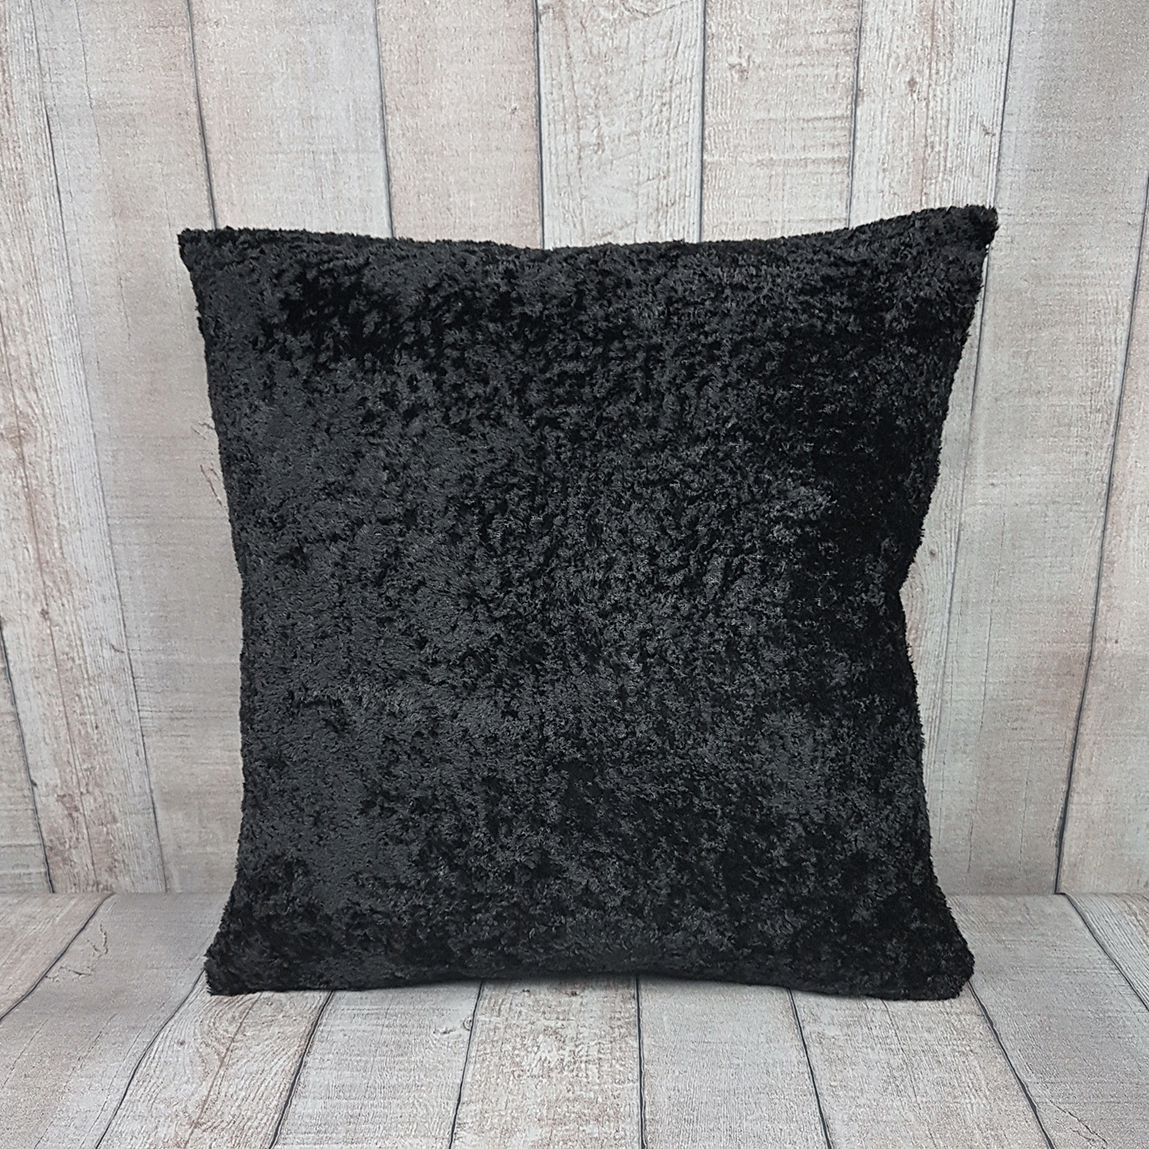 Black Knitted Teddy Fur Cushion Cover 45x45